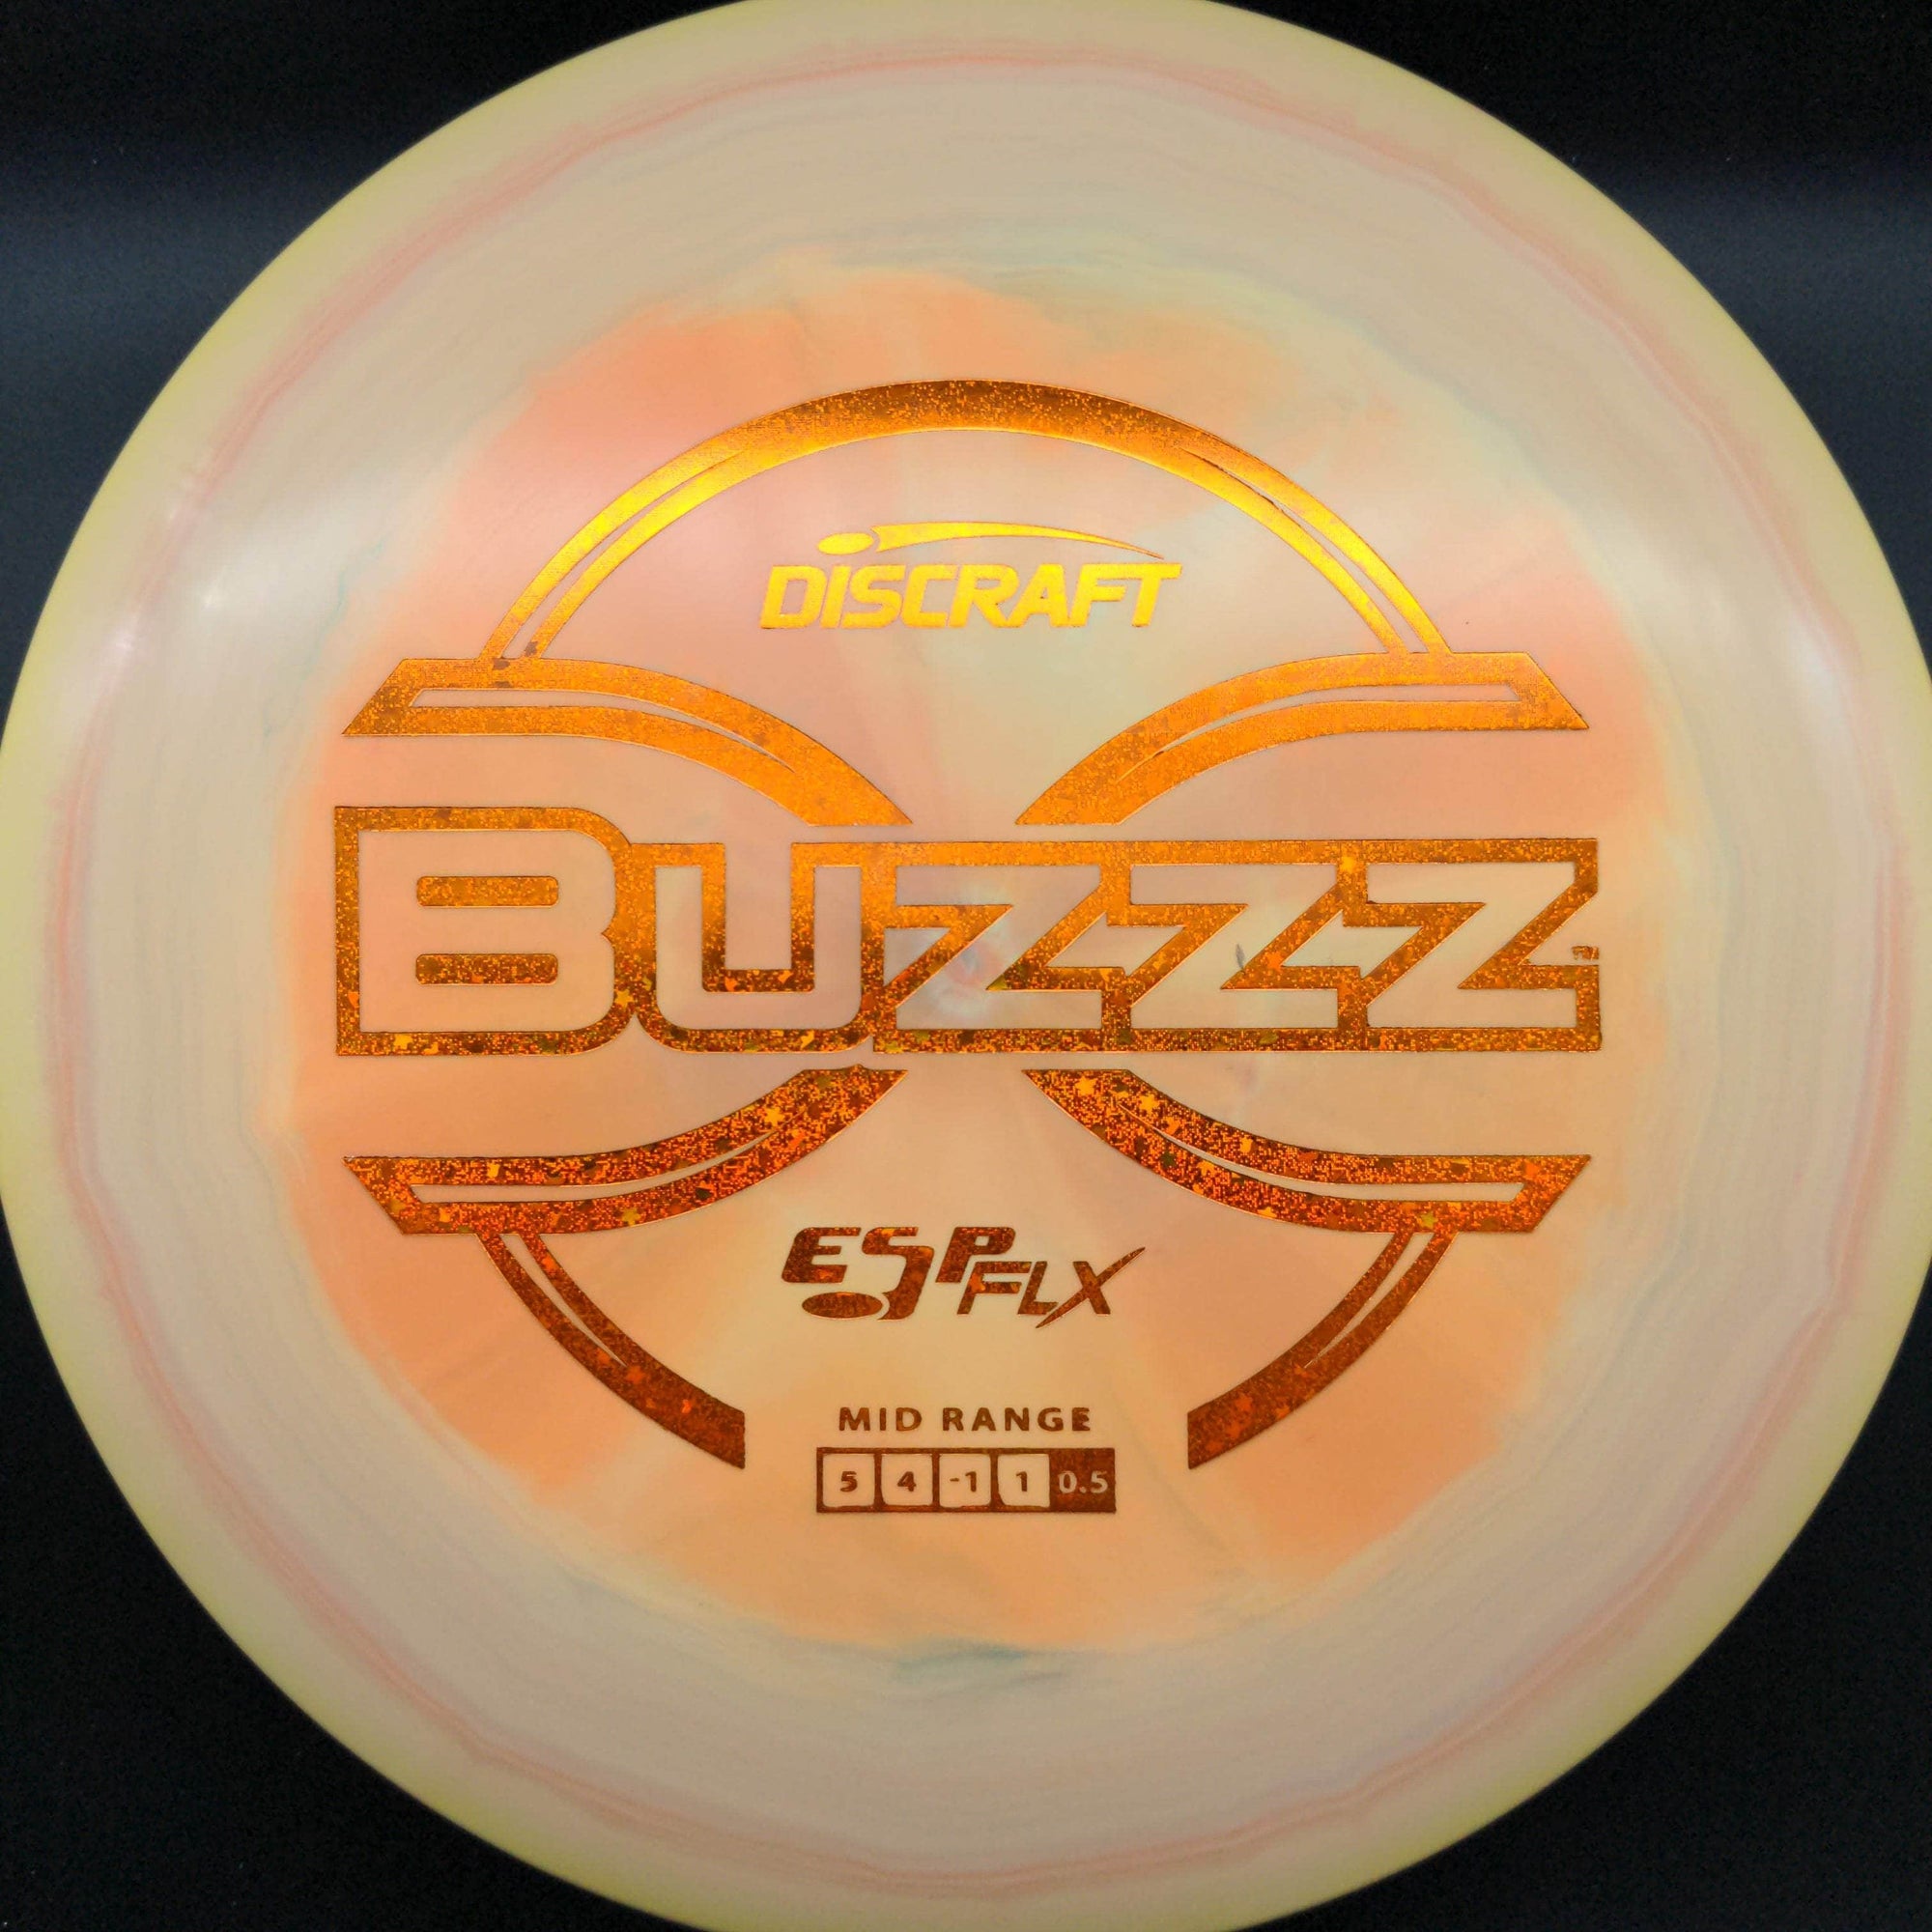 Discraft Mid Range Buzzz, ESP Flx